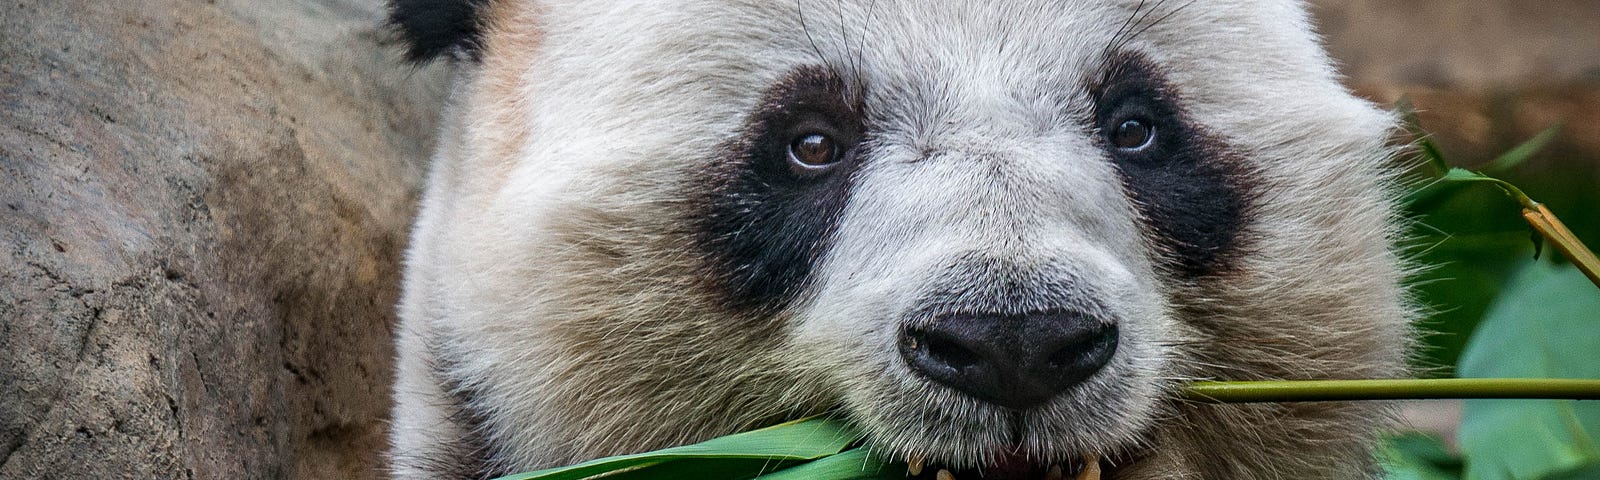 A Panda eating a green leafy branch.